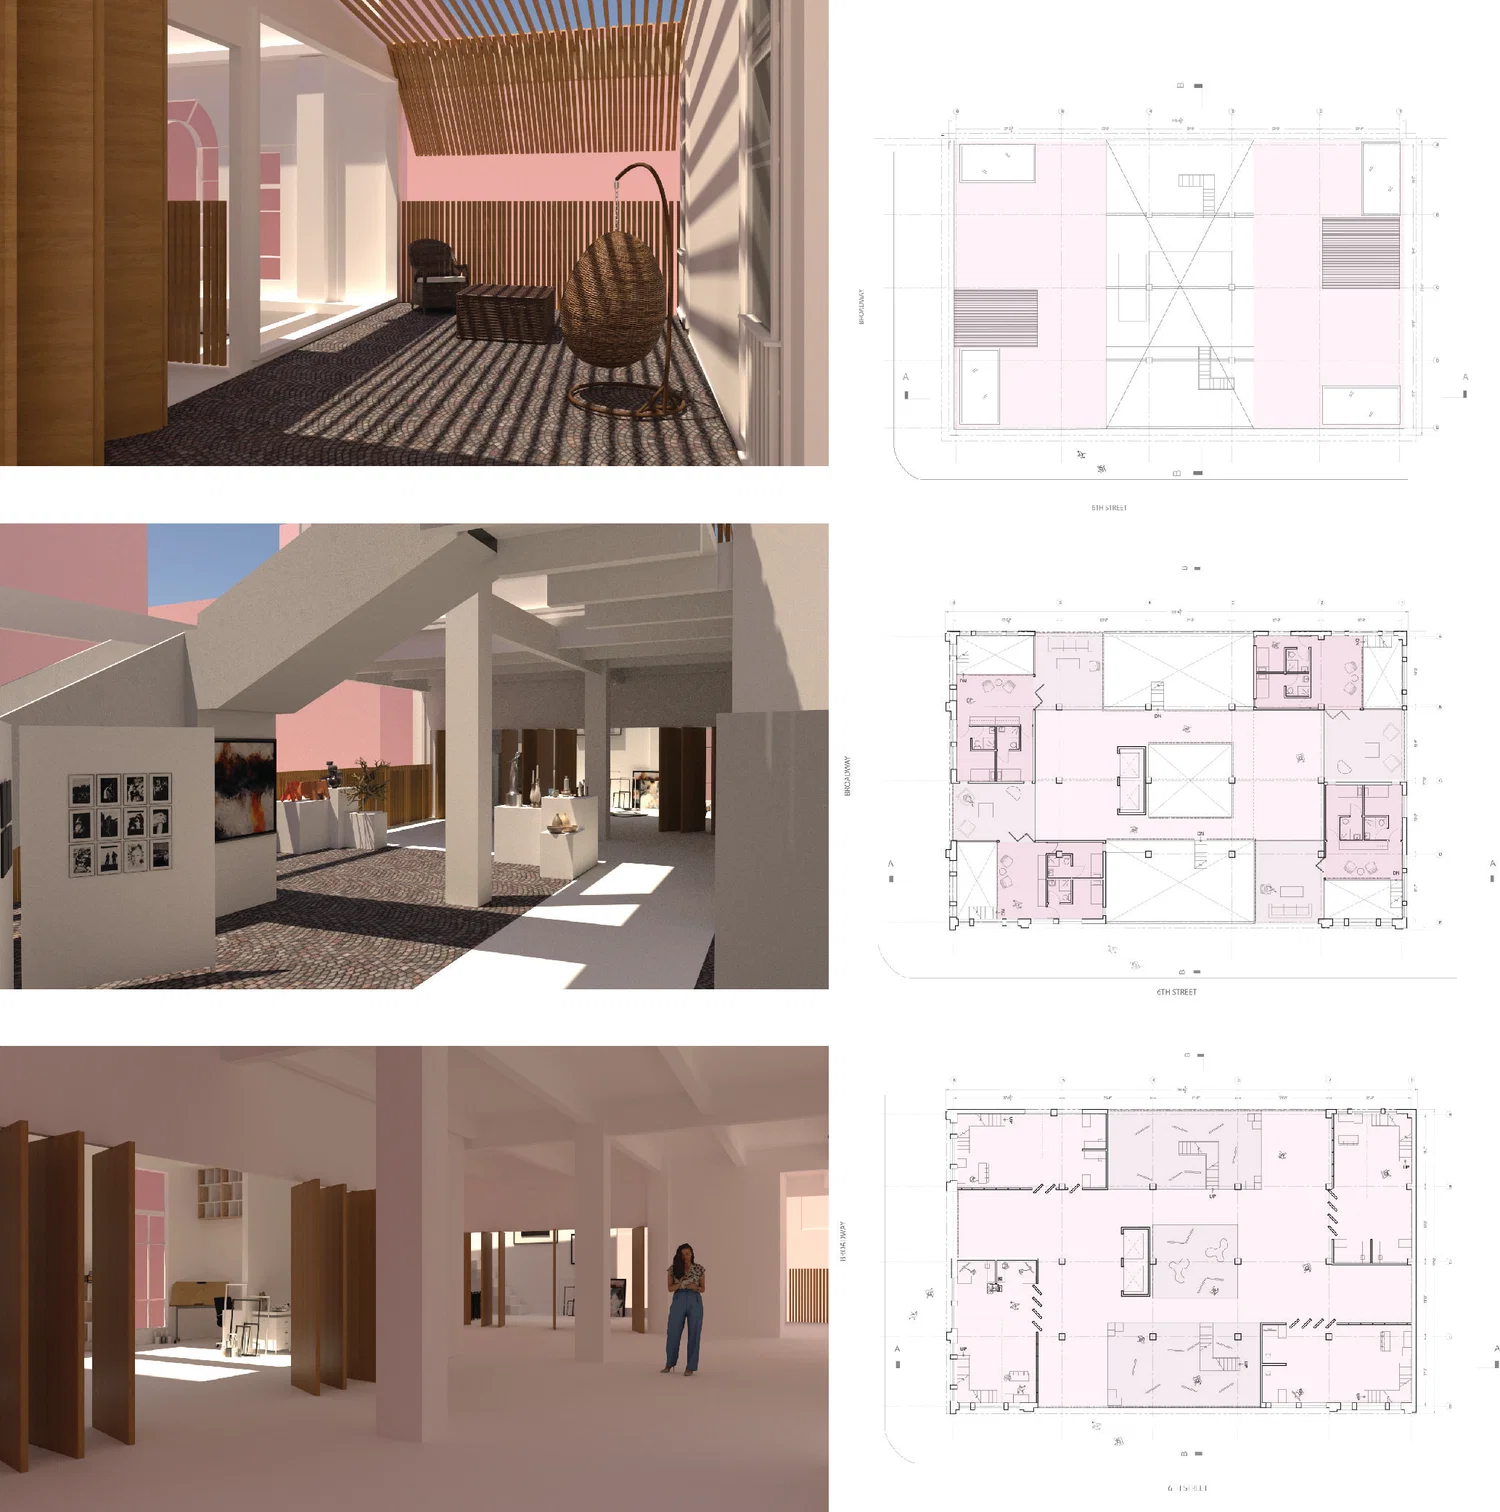 Studio IV: Plans and Interior Views